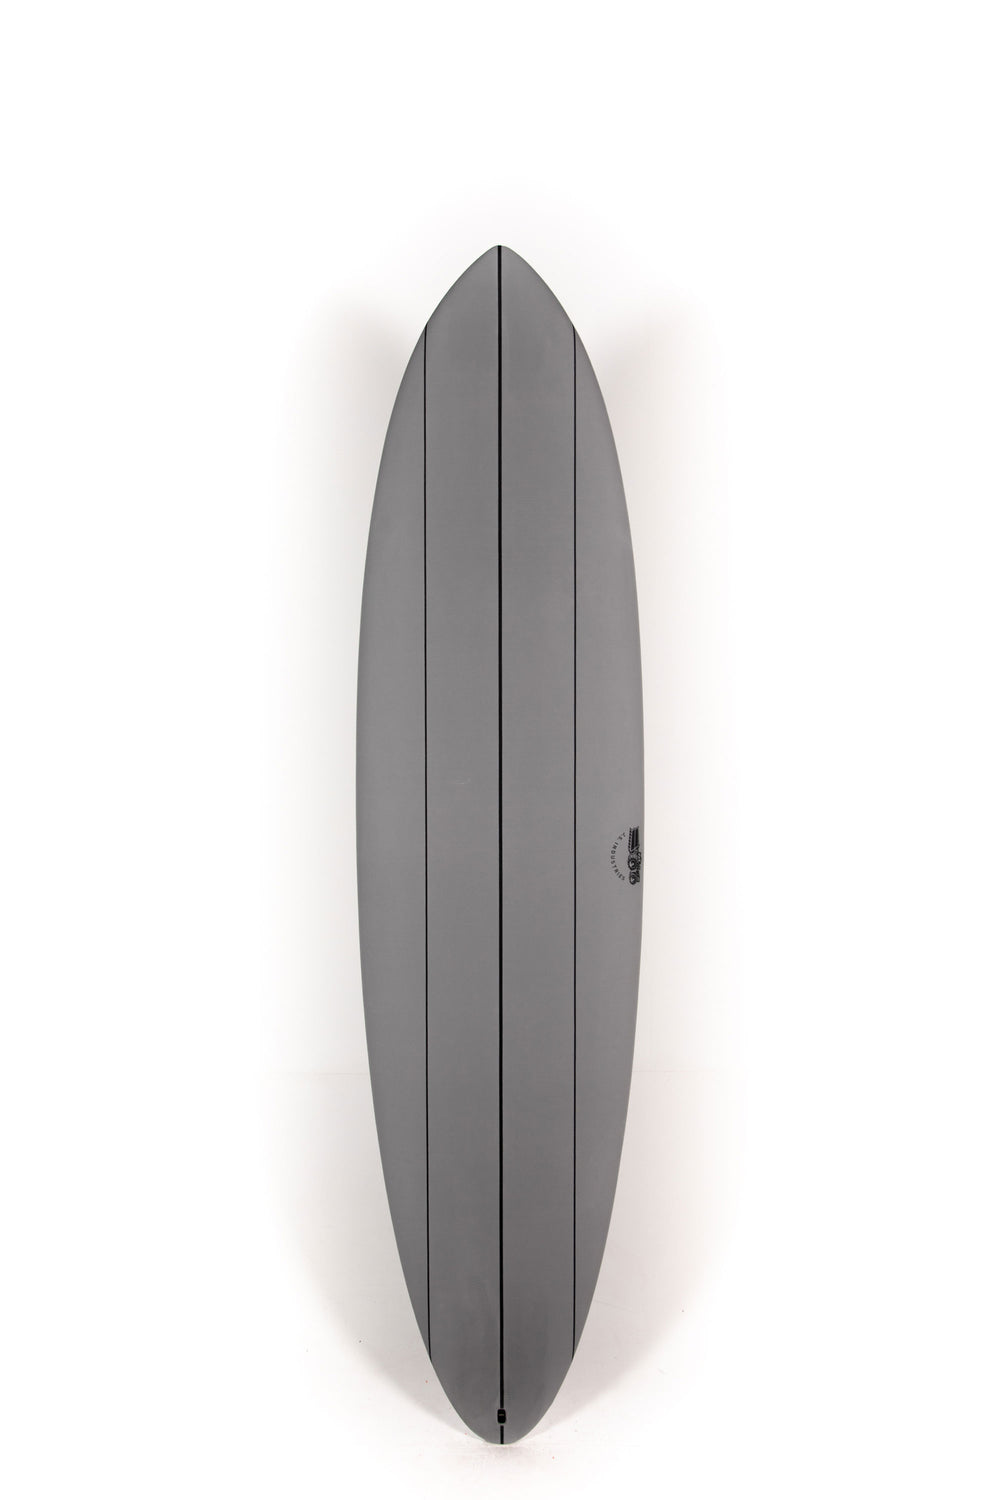 Pukas Surf Shop - JS Surfboards - BIG BARON SOFT - 7'6